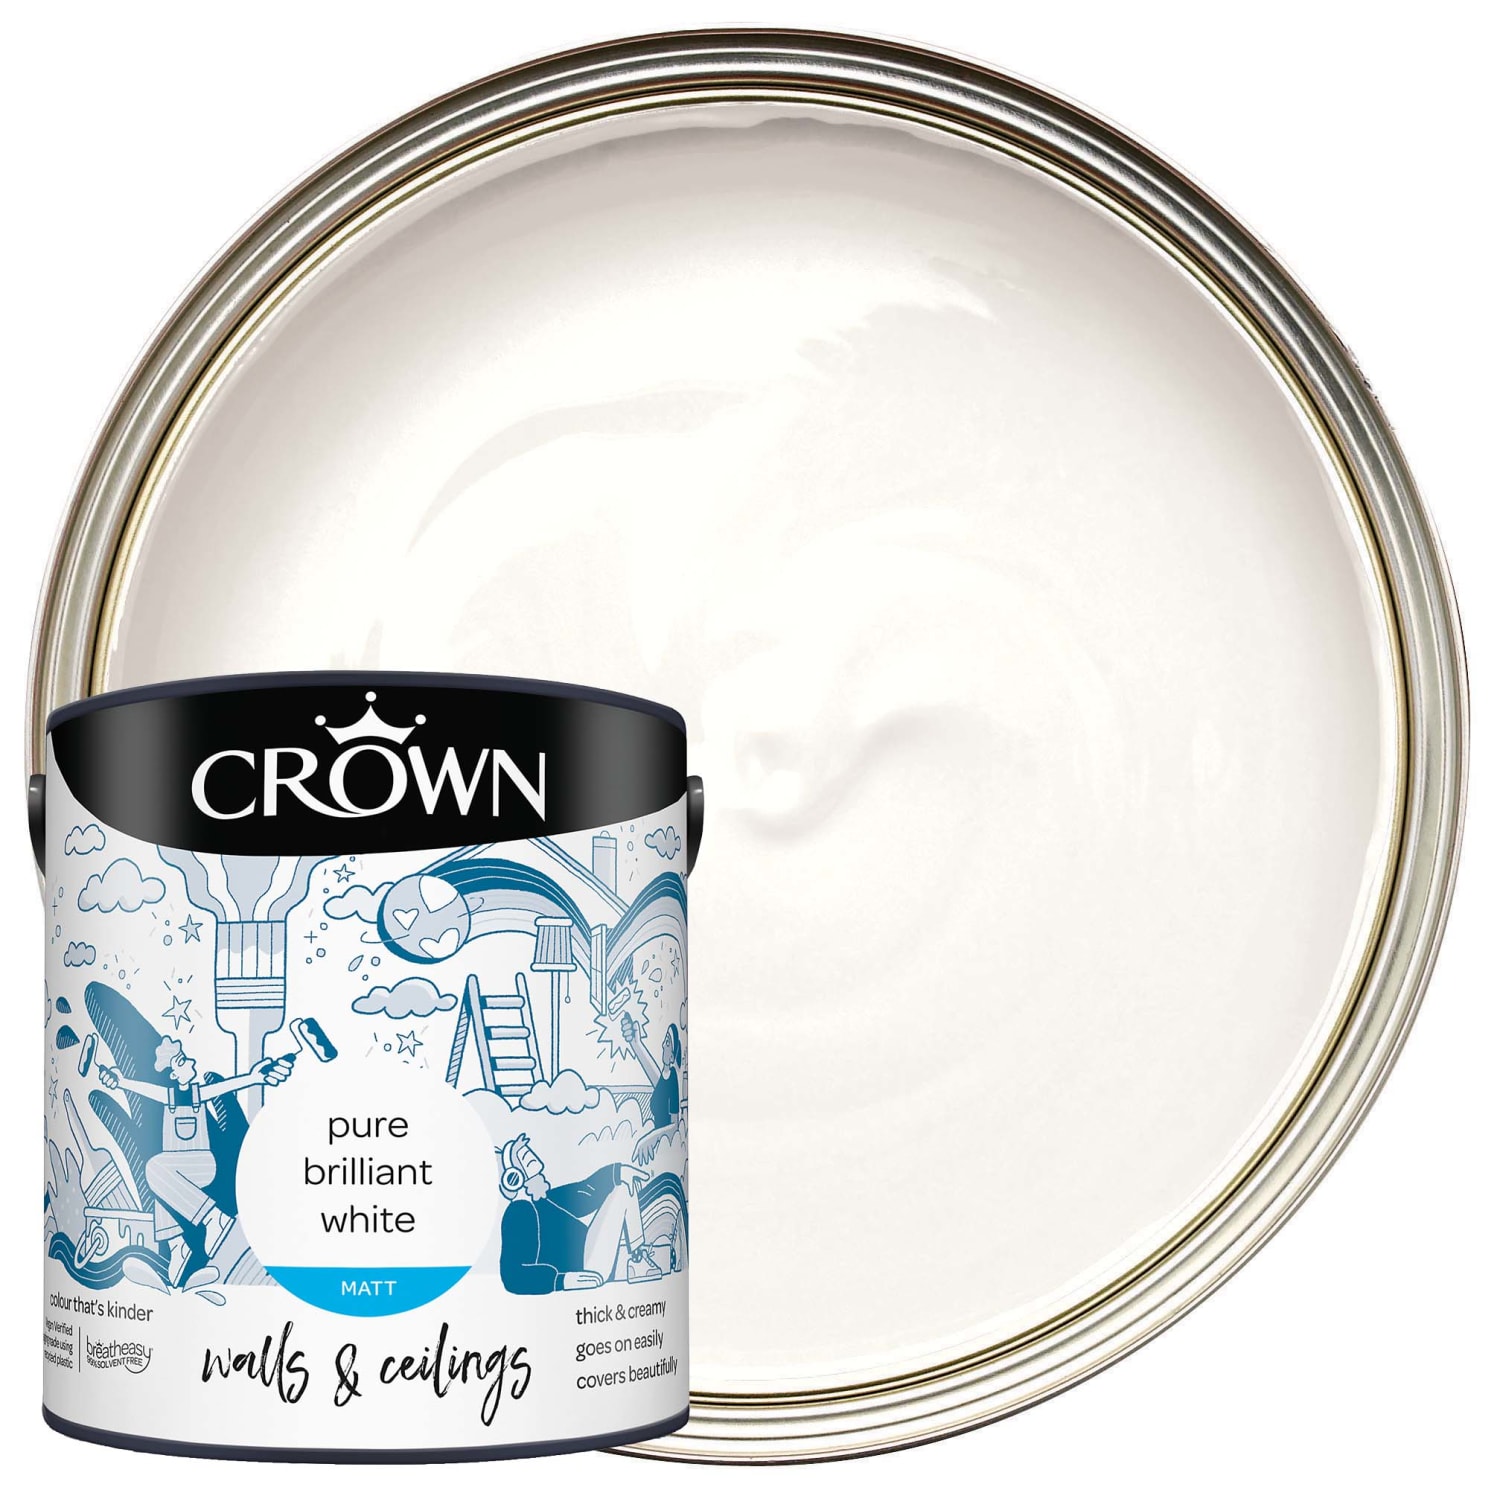 Wilko Tough & Washable Pure Brilliant White Matt Emulsion Paint 2.5L